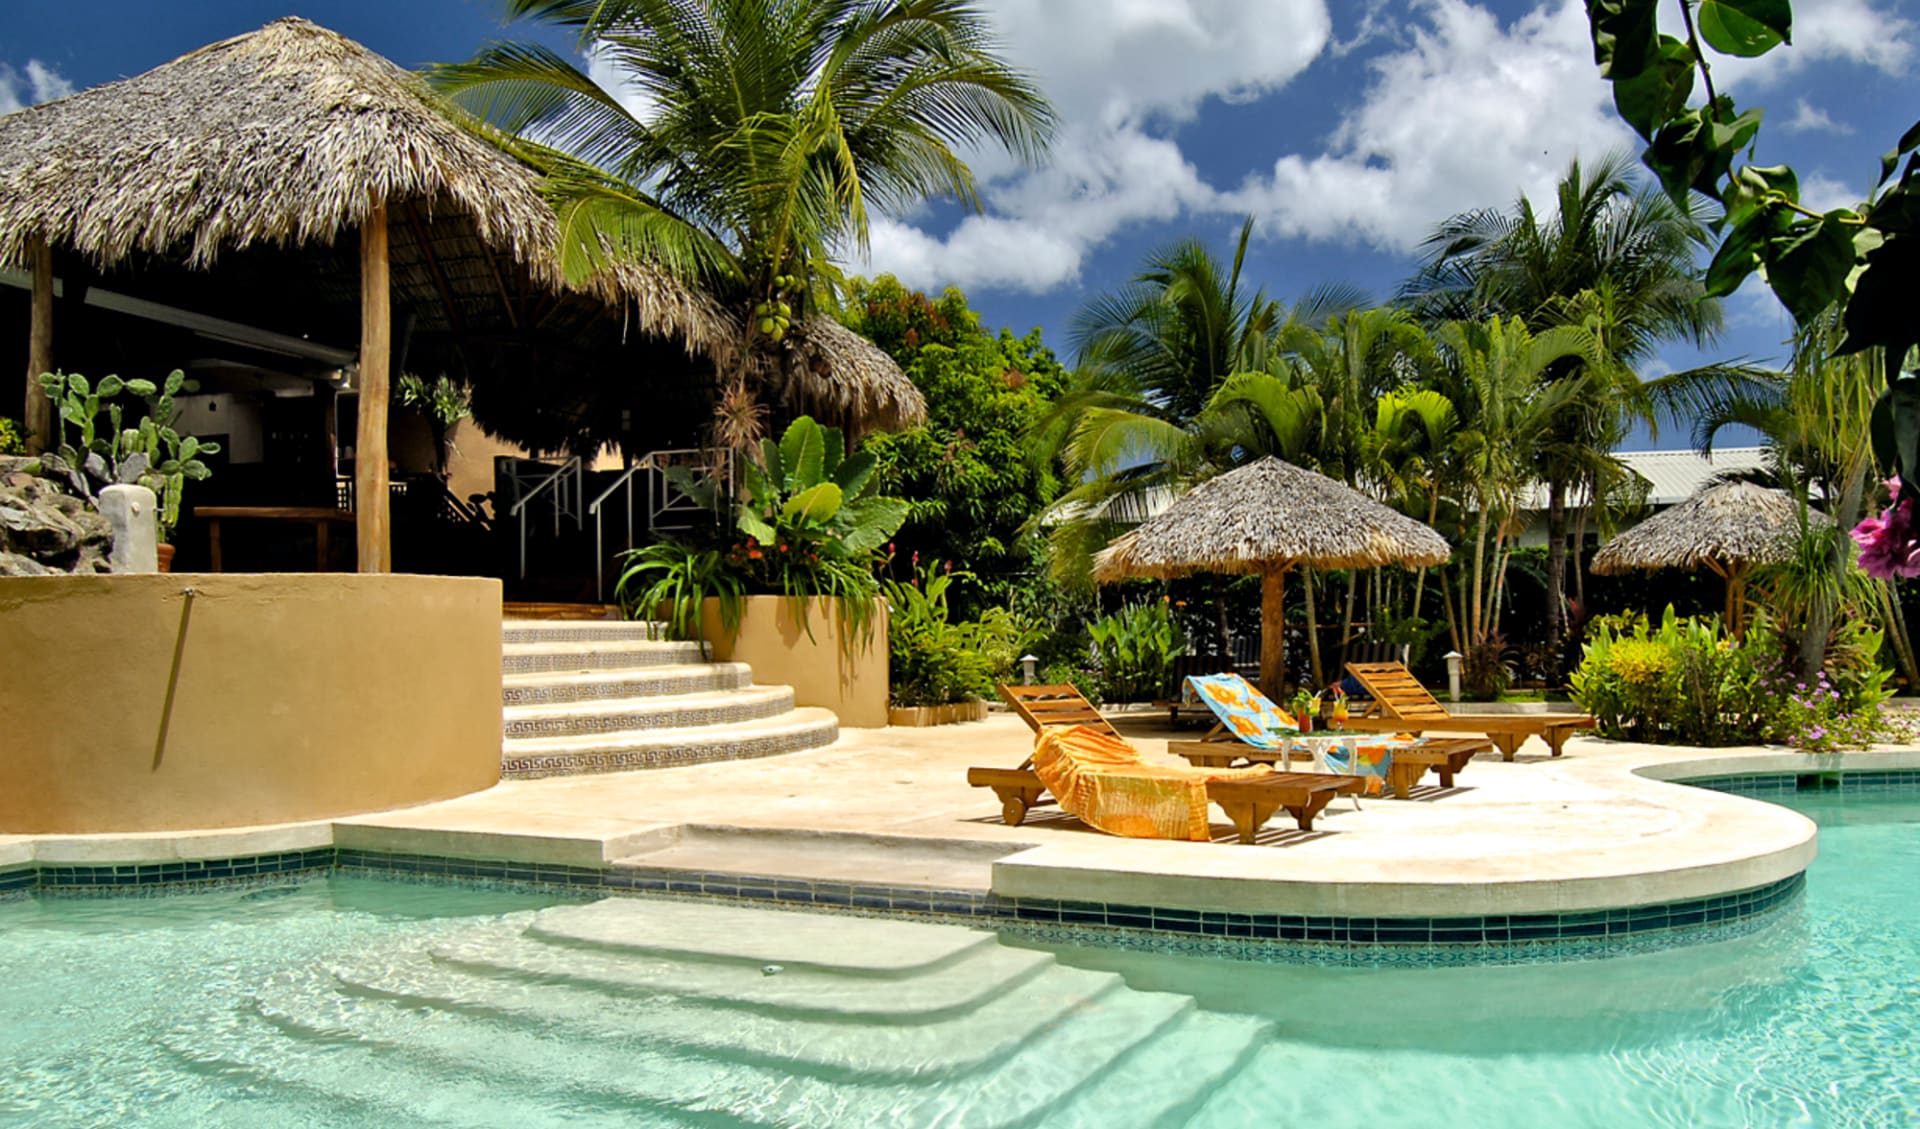 Jardin del Eden in Playa Tamarindo: pool jardin del eden pool liegen hütte